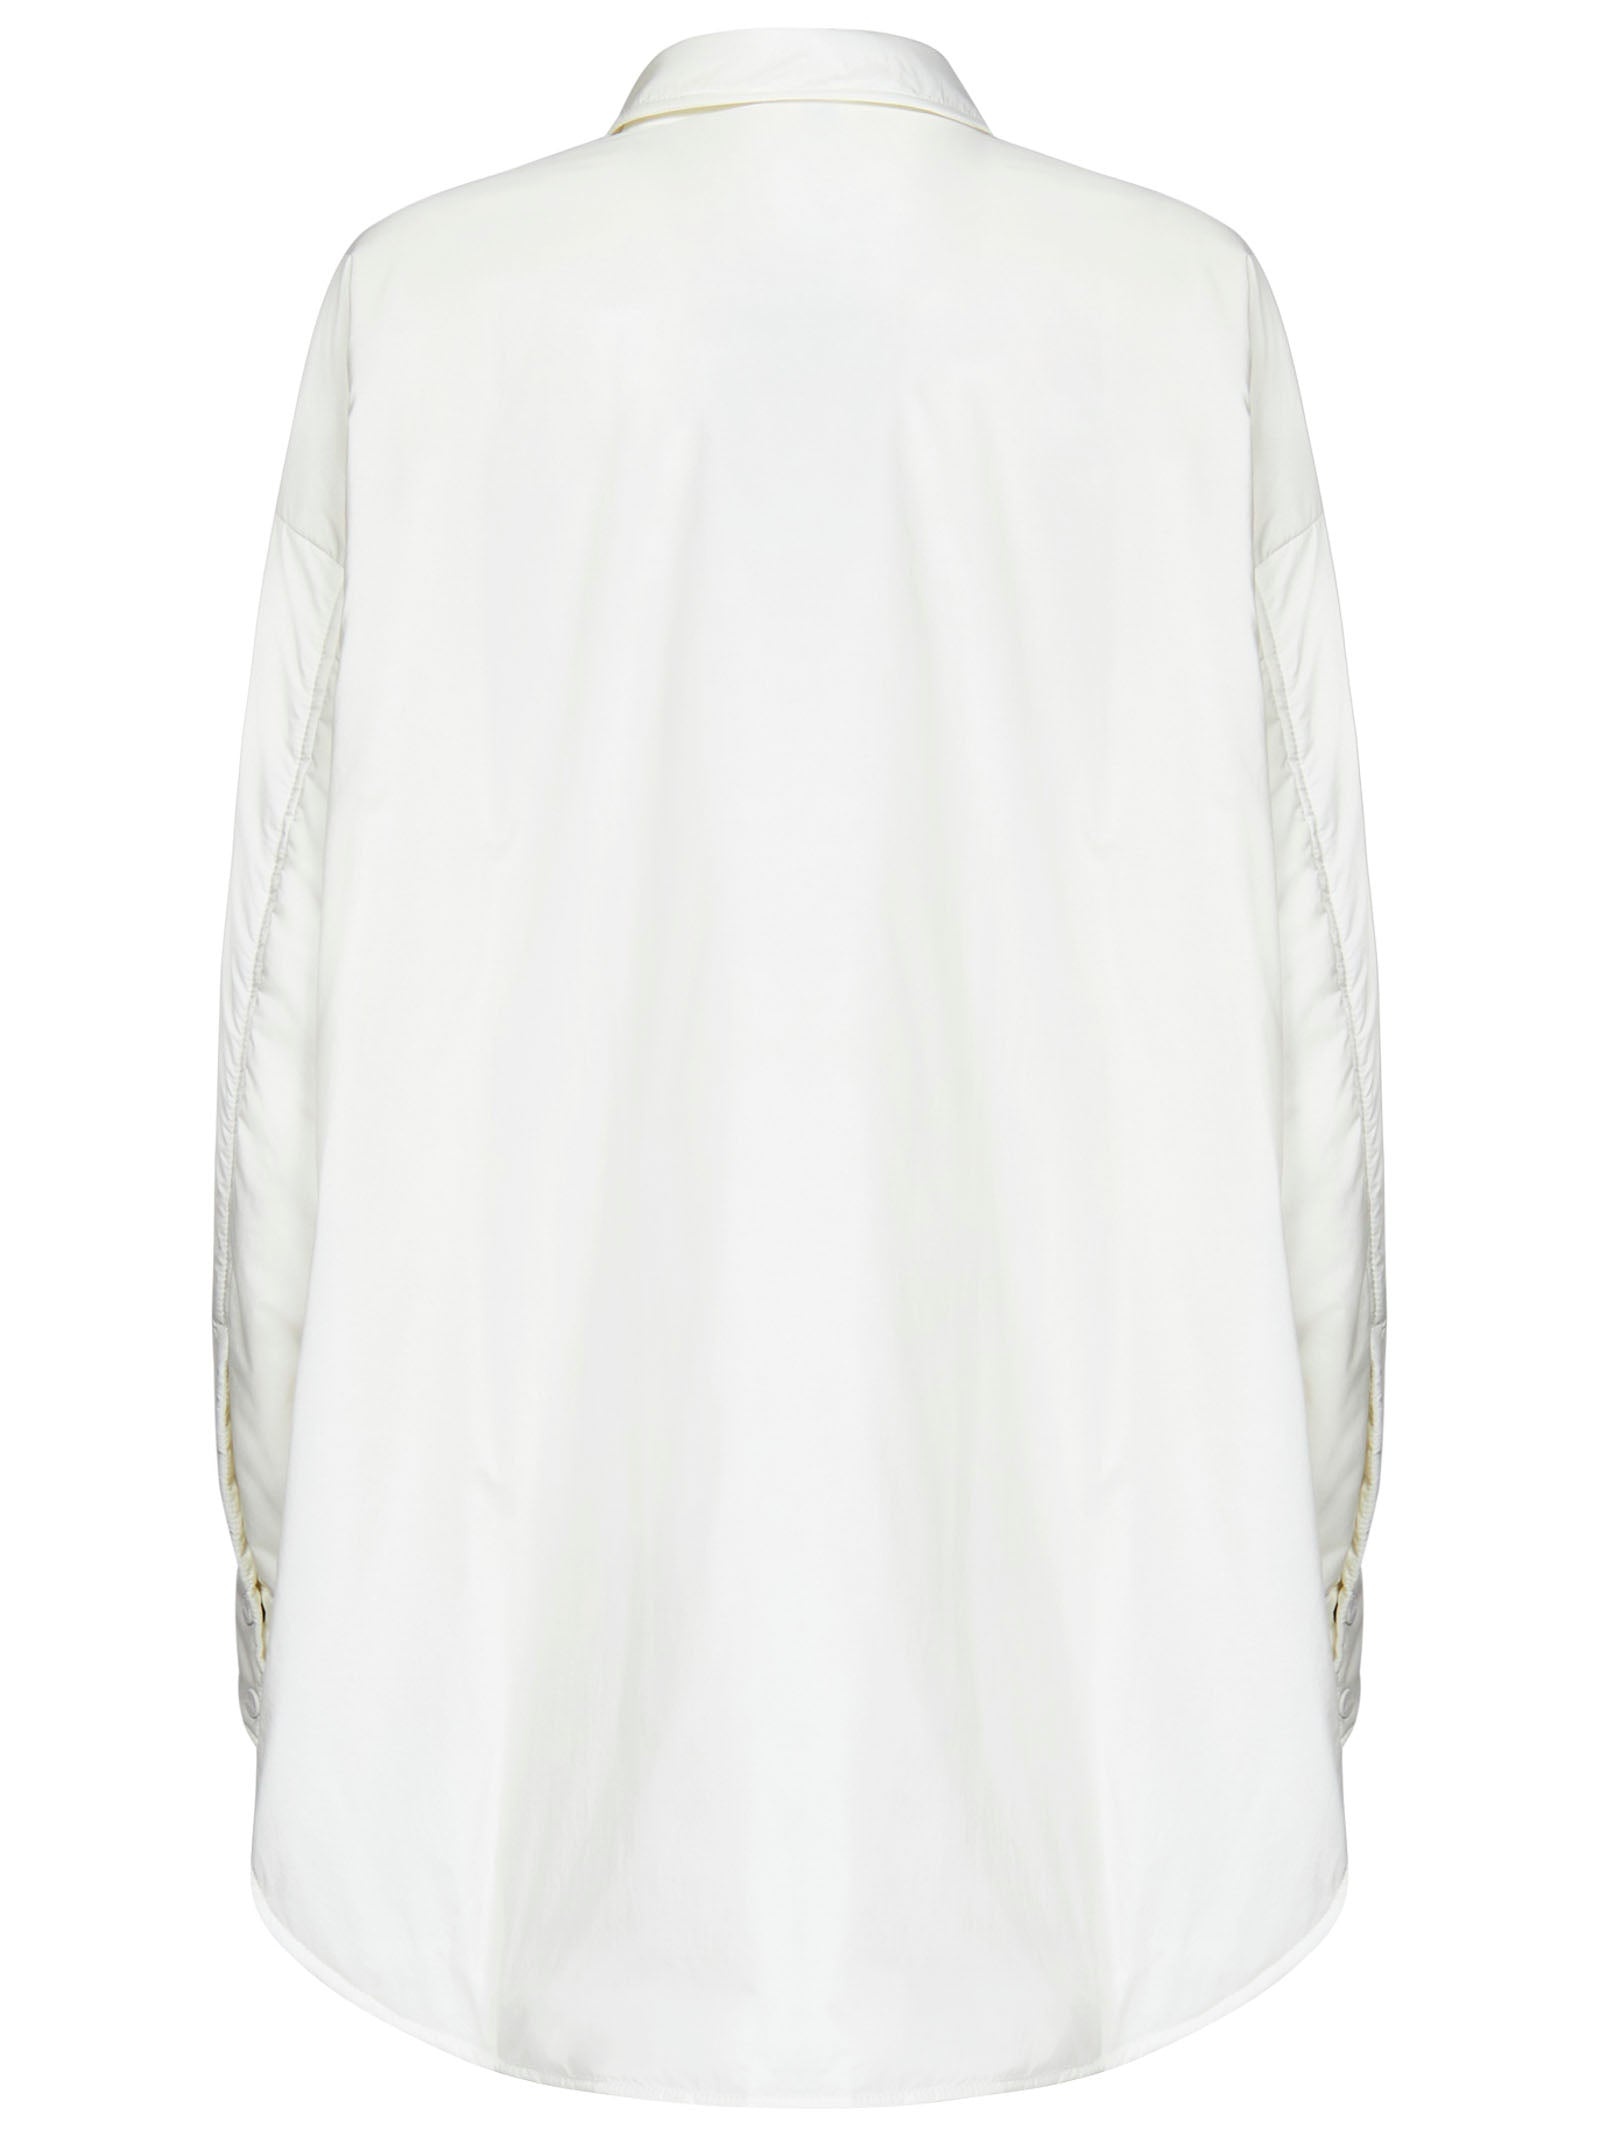 Oversized white shirt in ultralight 20 denier nylon with thin padding. - 2